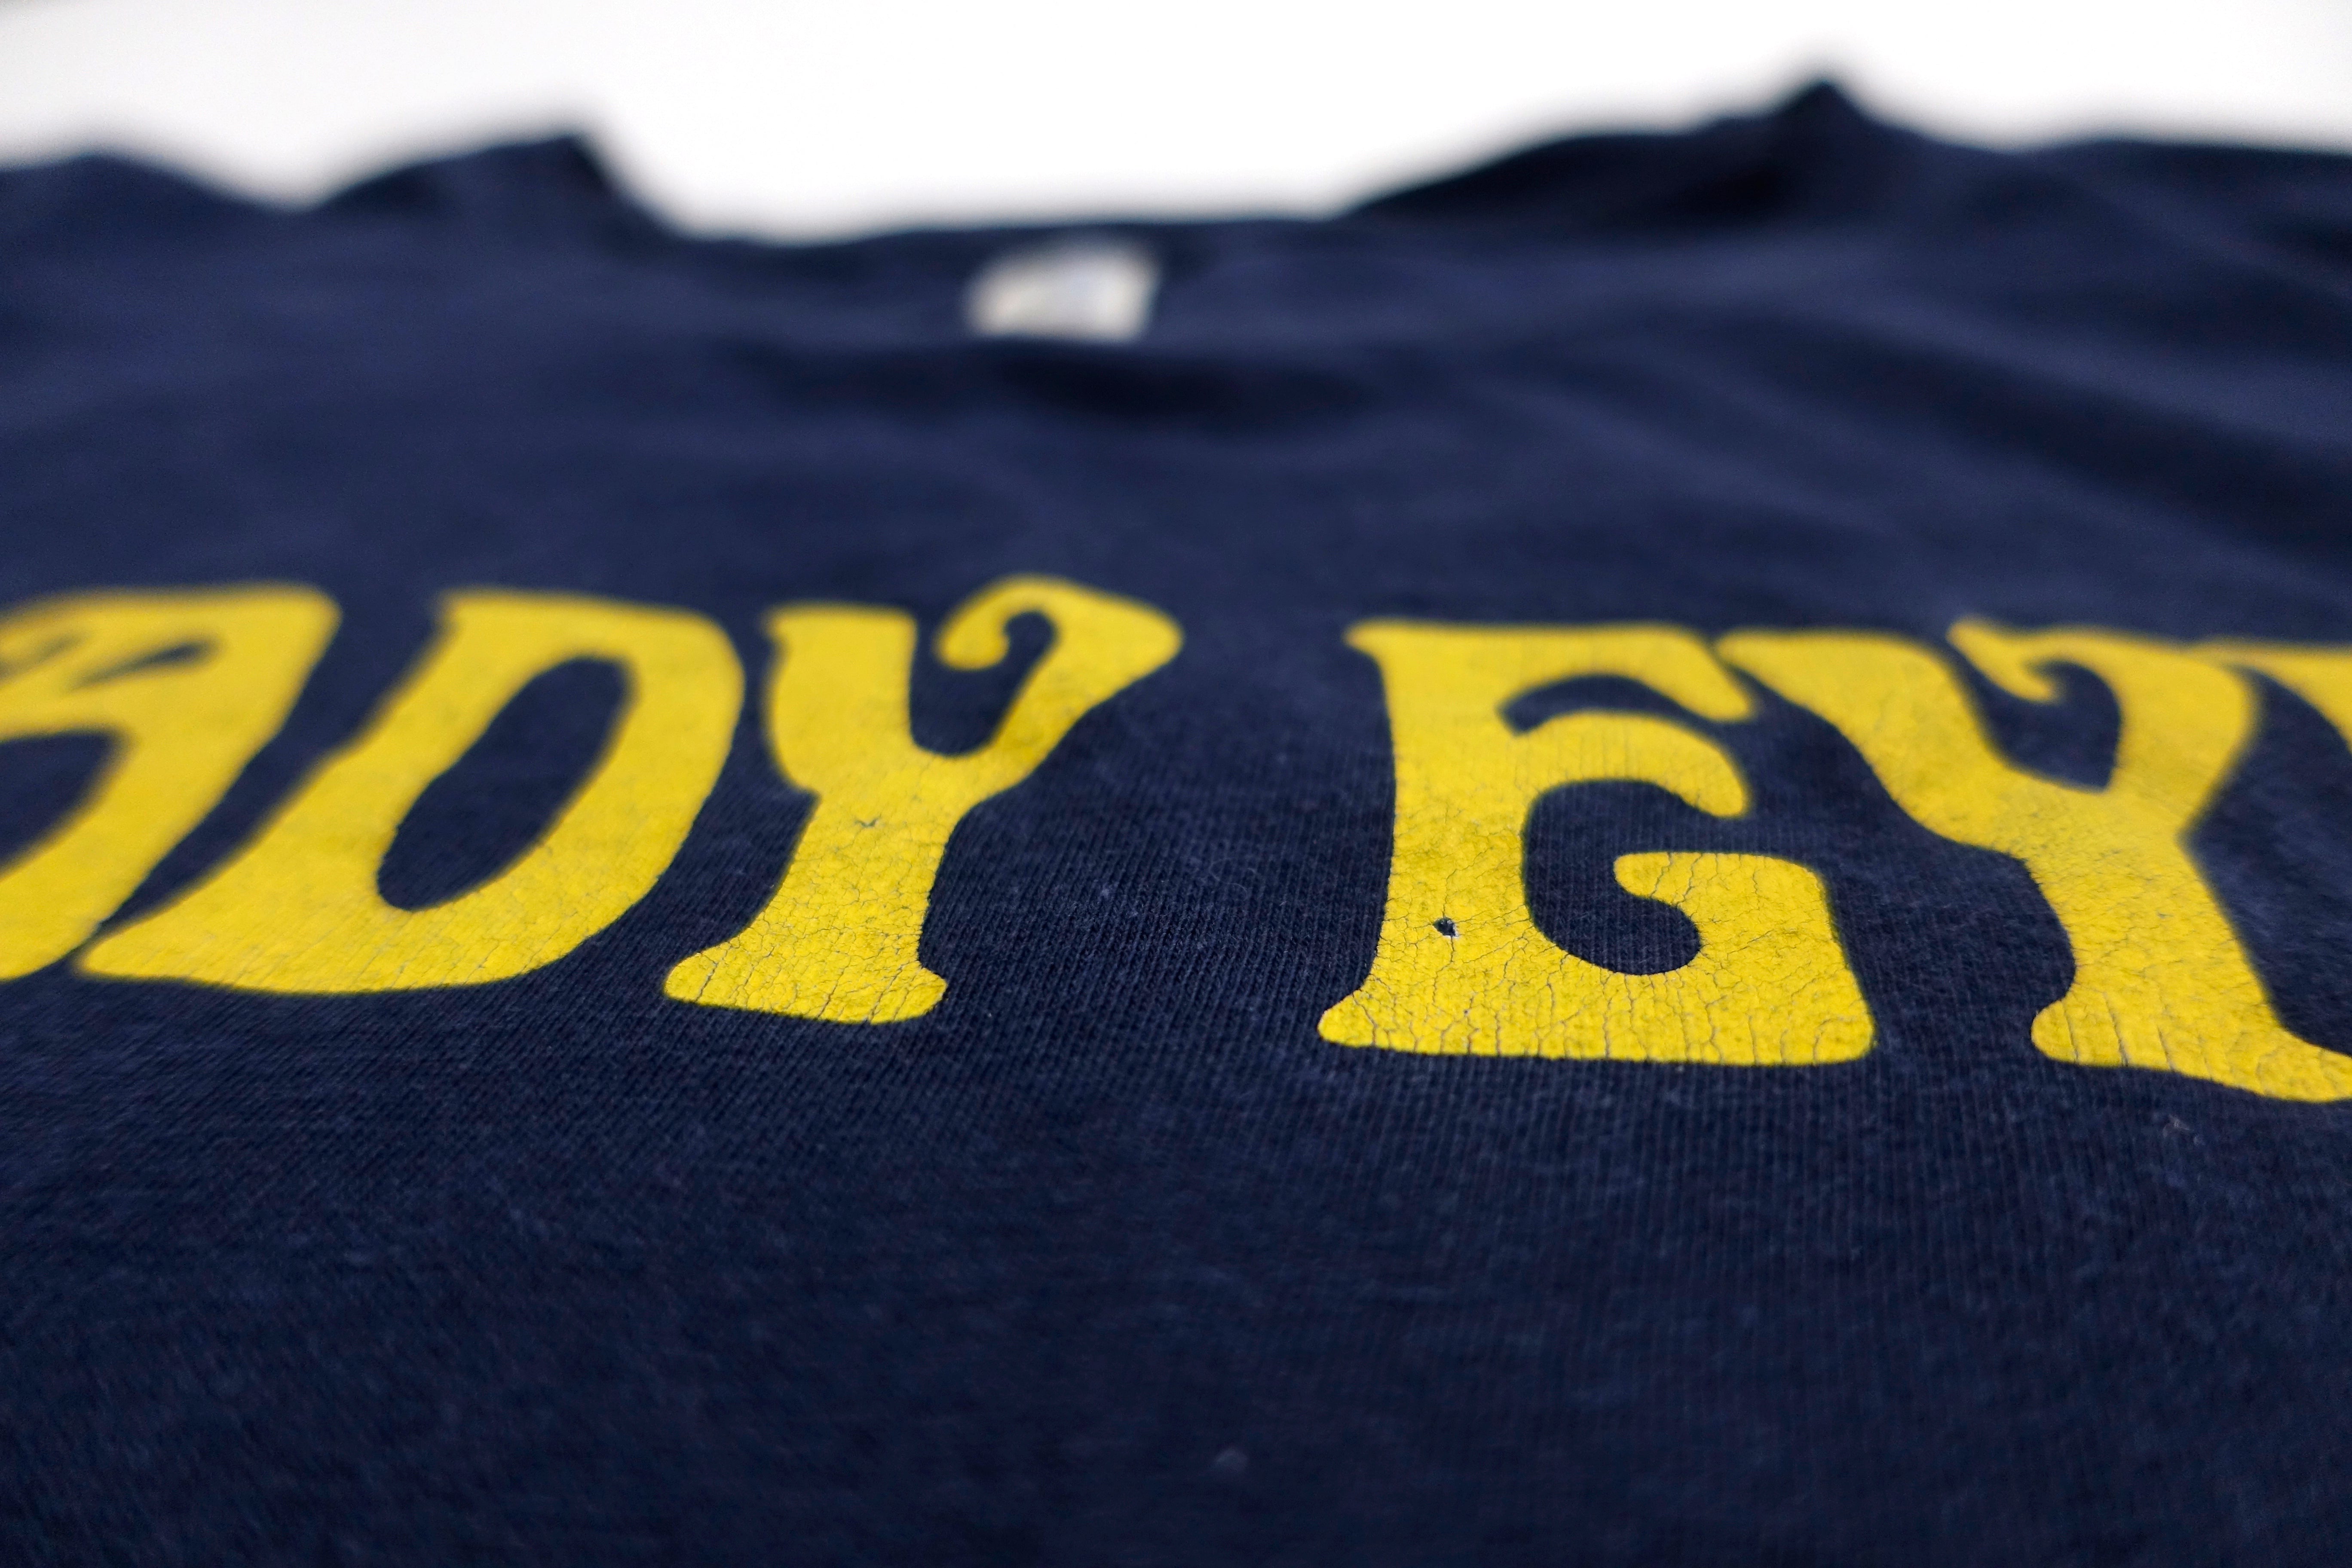 Beady Eye - Different Gear, Still Speeding North America June 2011 Tour Shirt Size Large